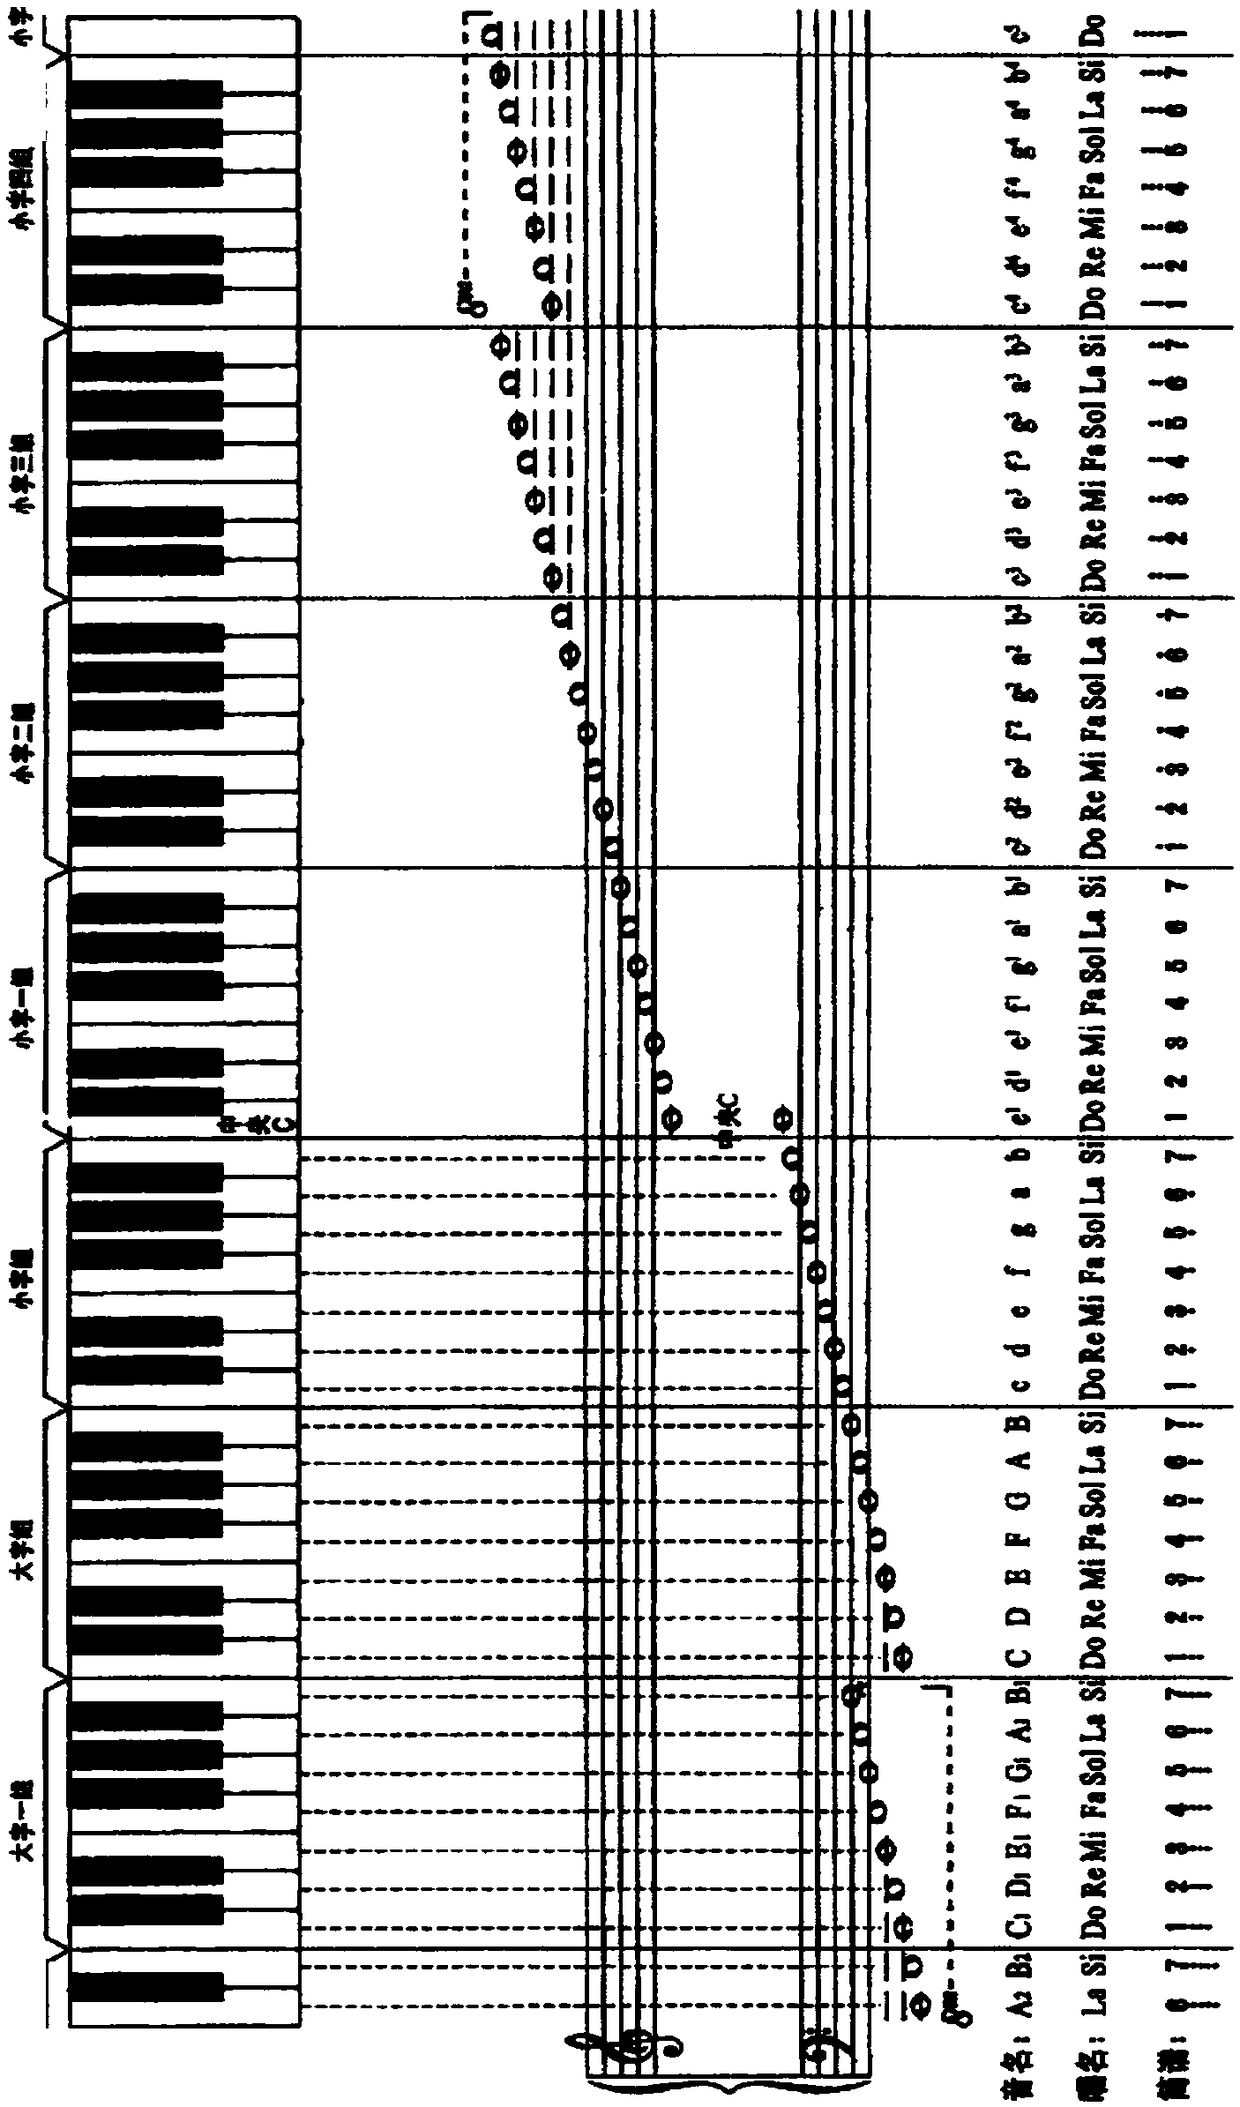 Piano keyboard, notation method and music score